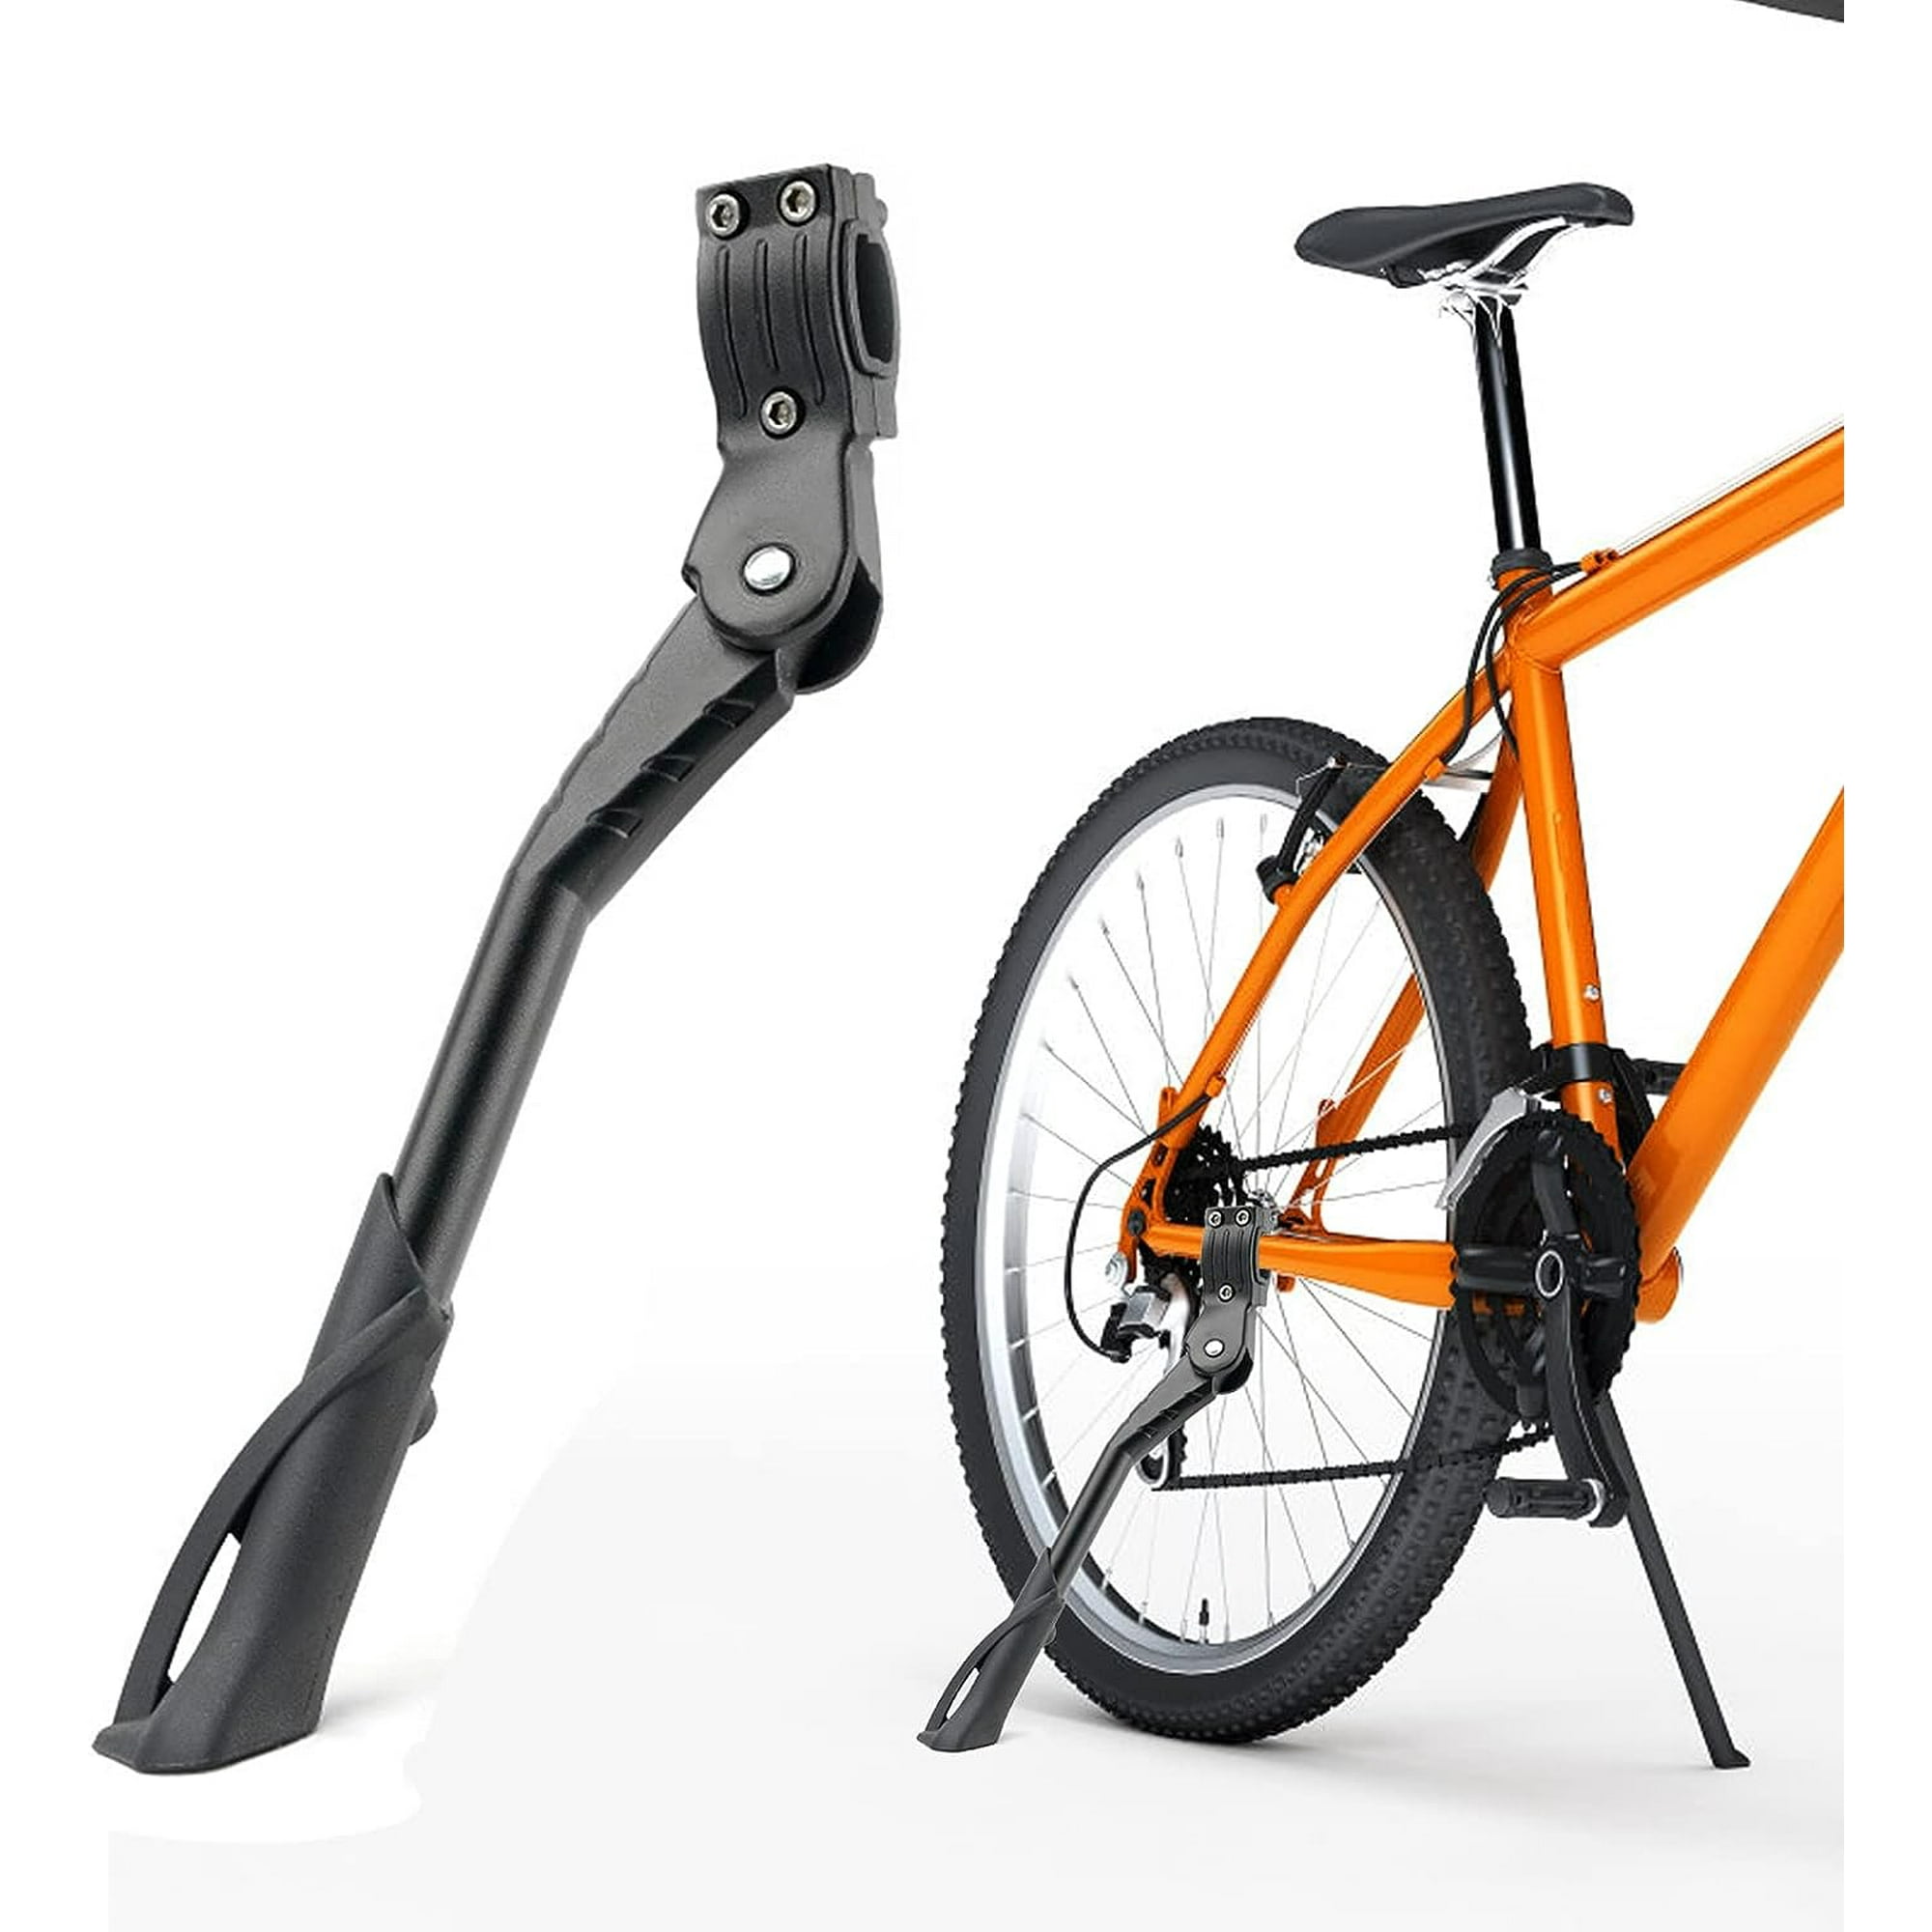 Rms 421890231 pata de cabra lateral para bicicleta electrica ajustabl